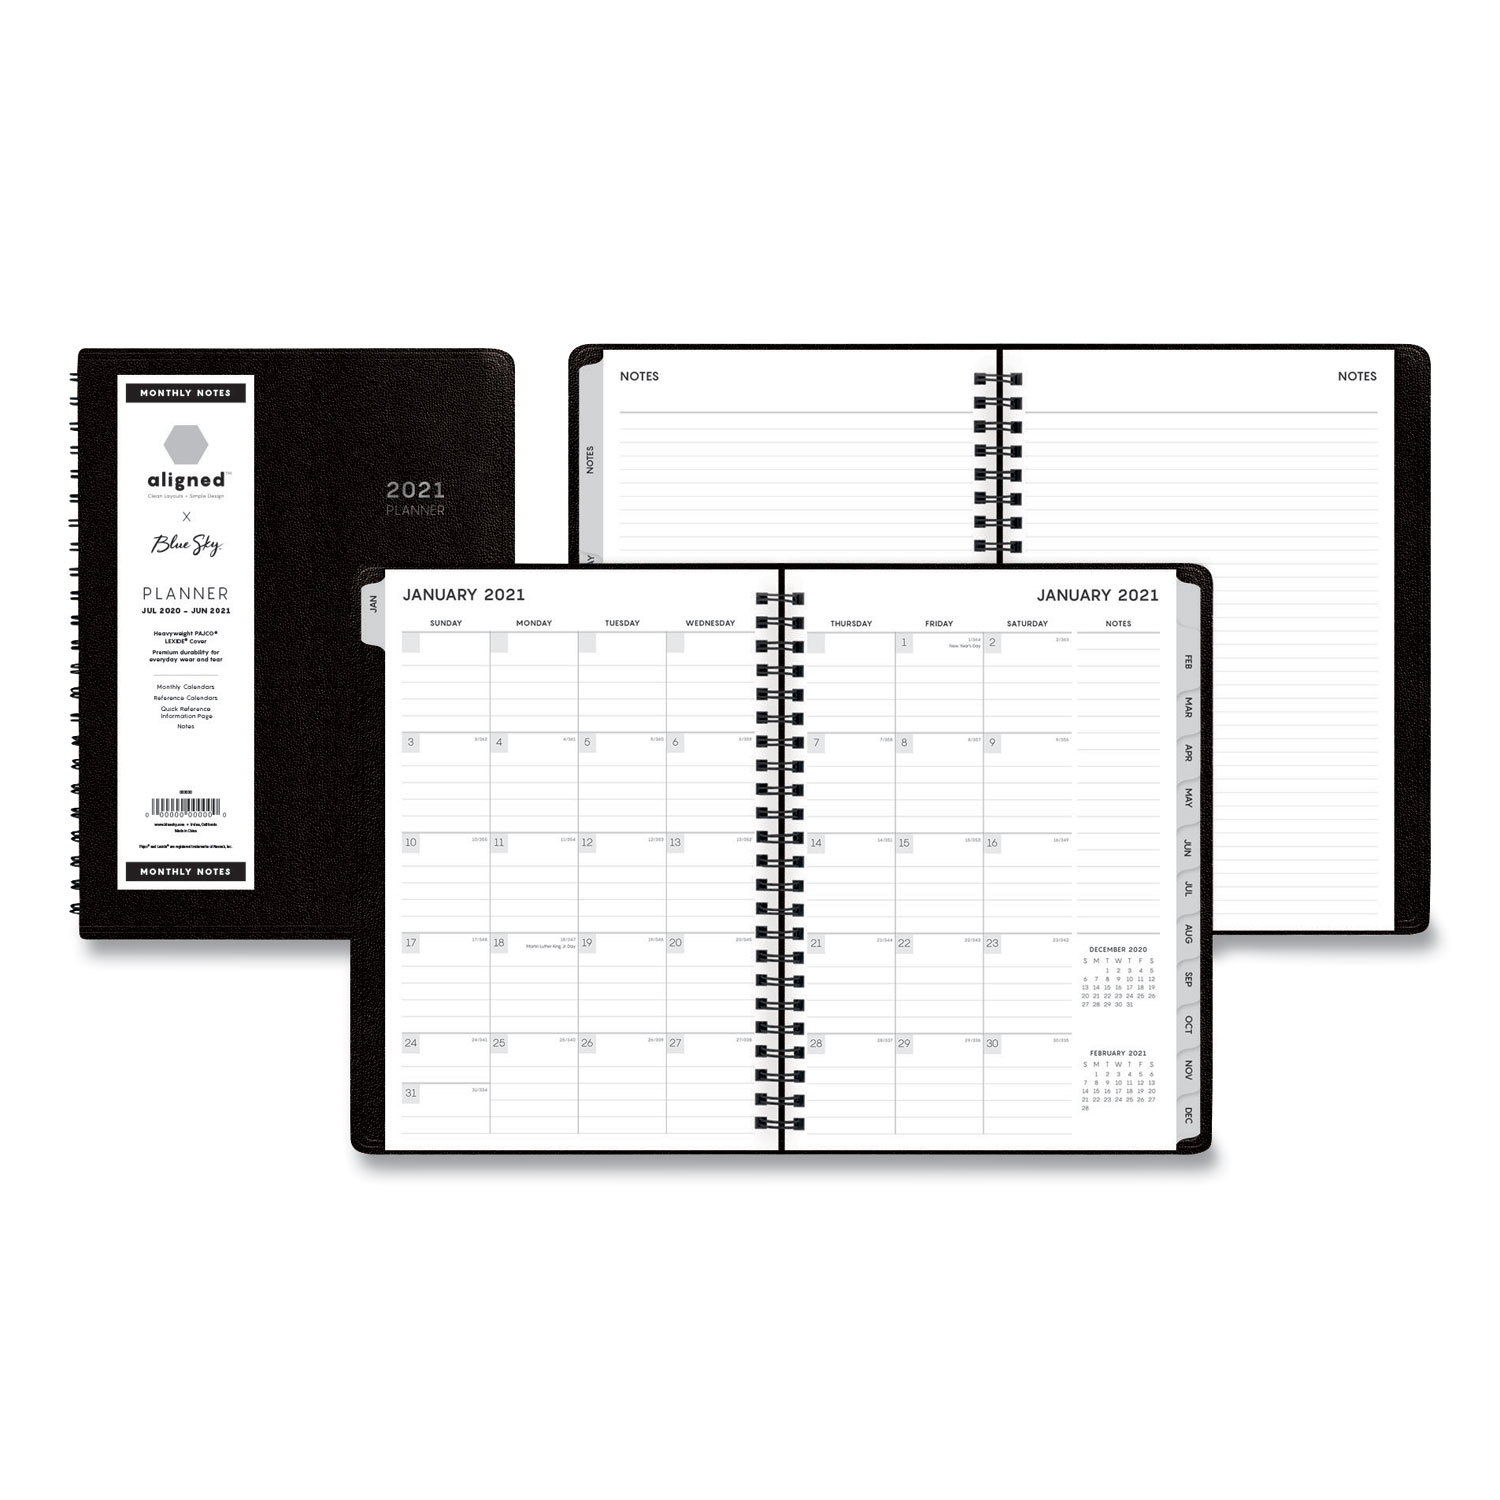 Blue Sky® Aligned Monthly Notes Planner, 8.63 x 5.88, Black, 2021